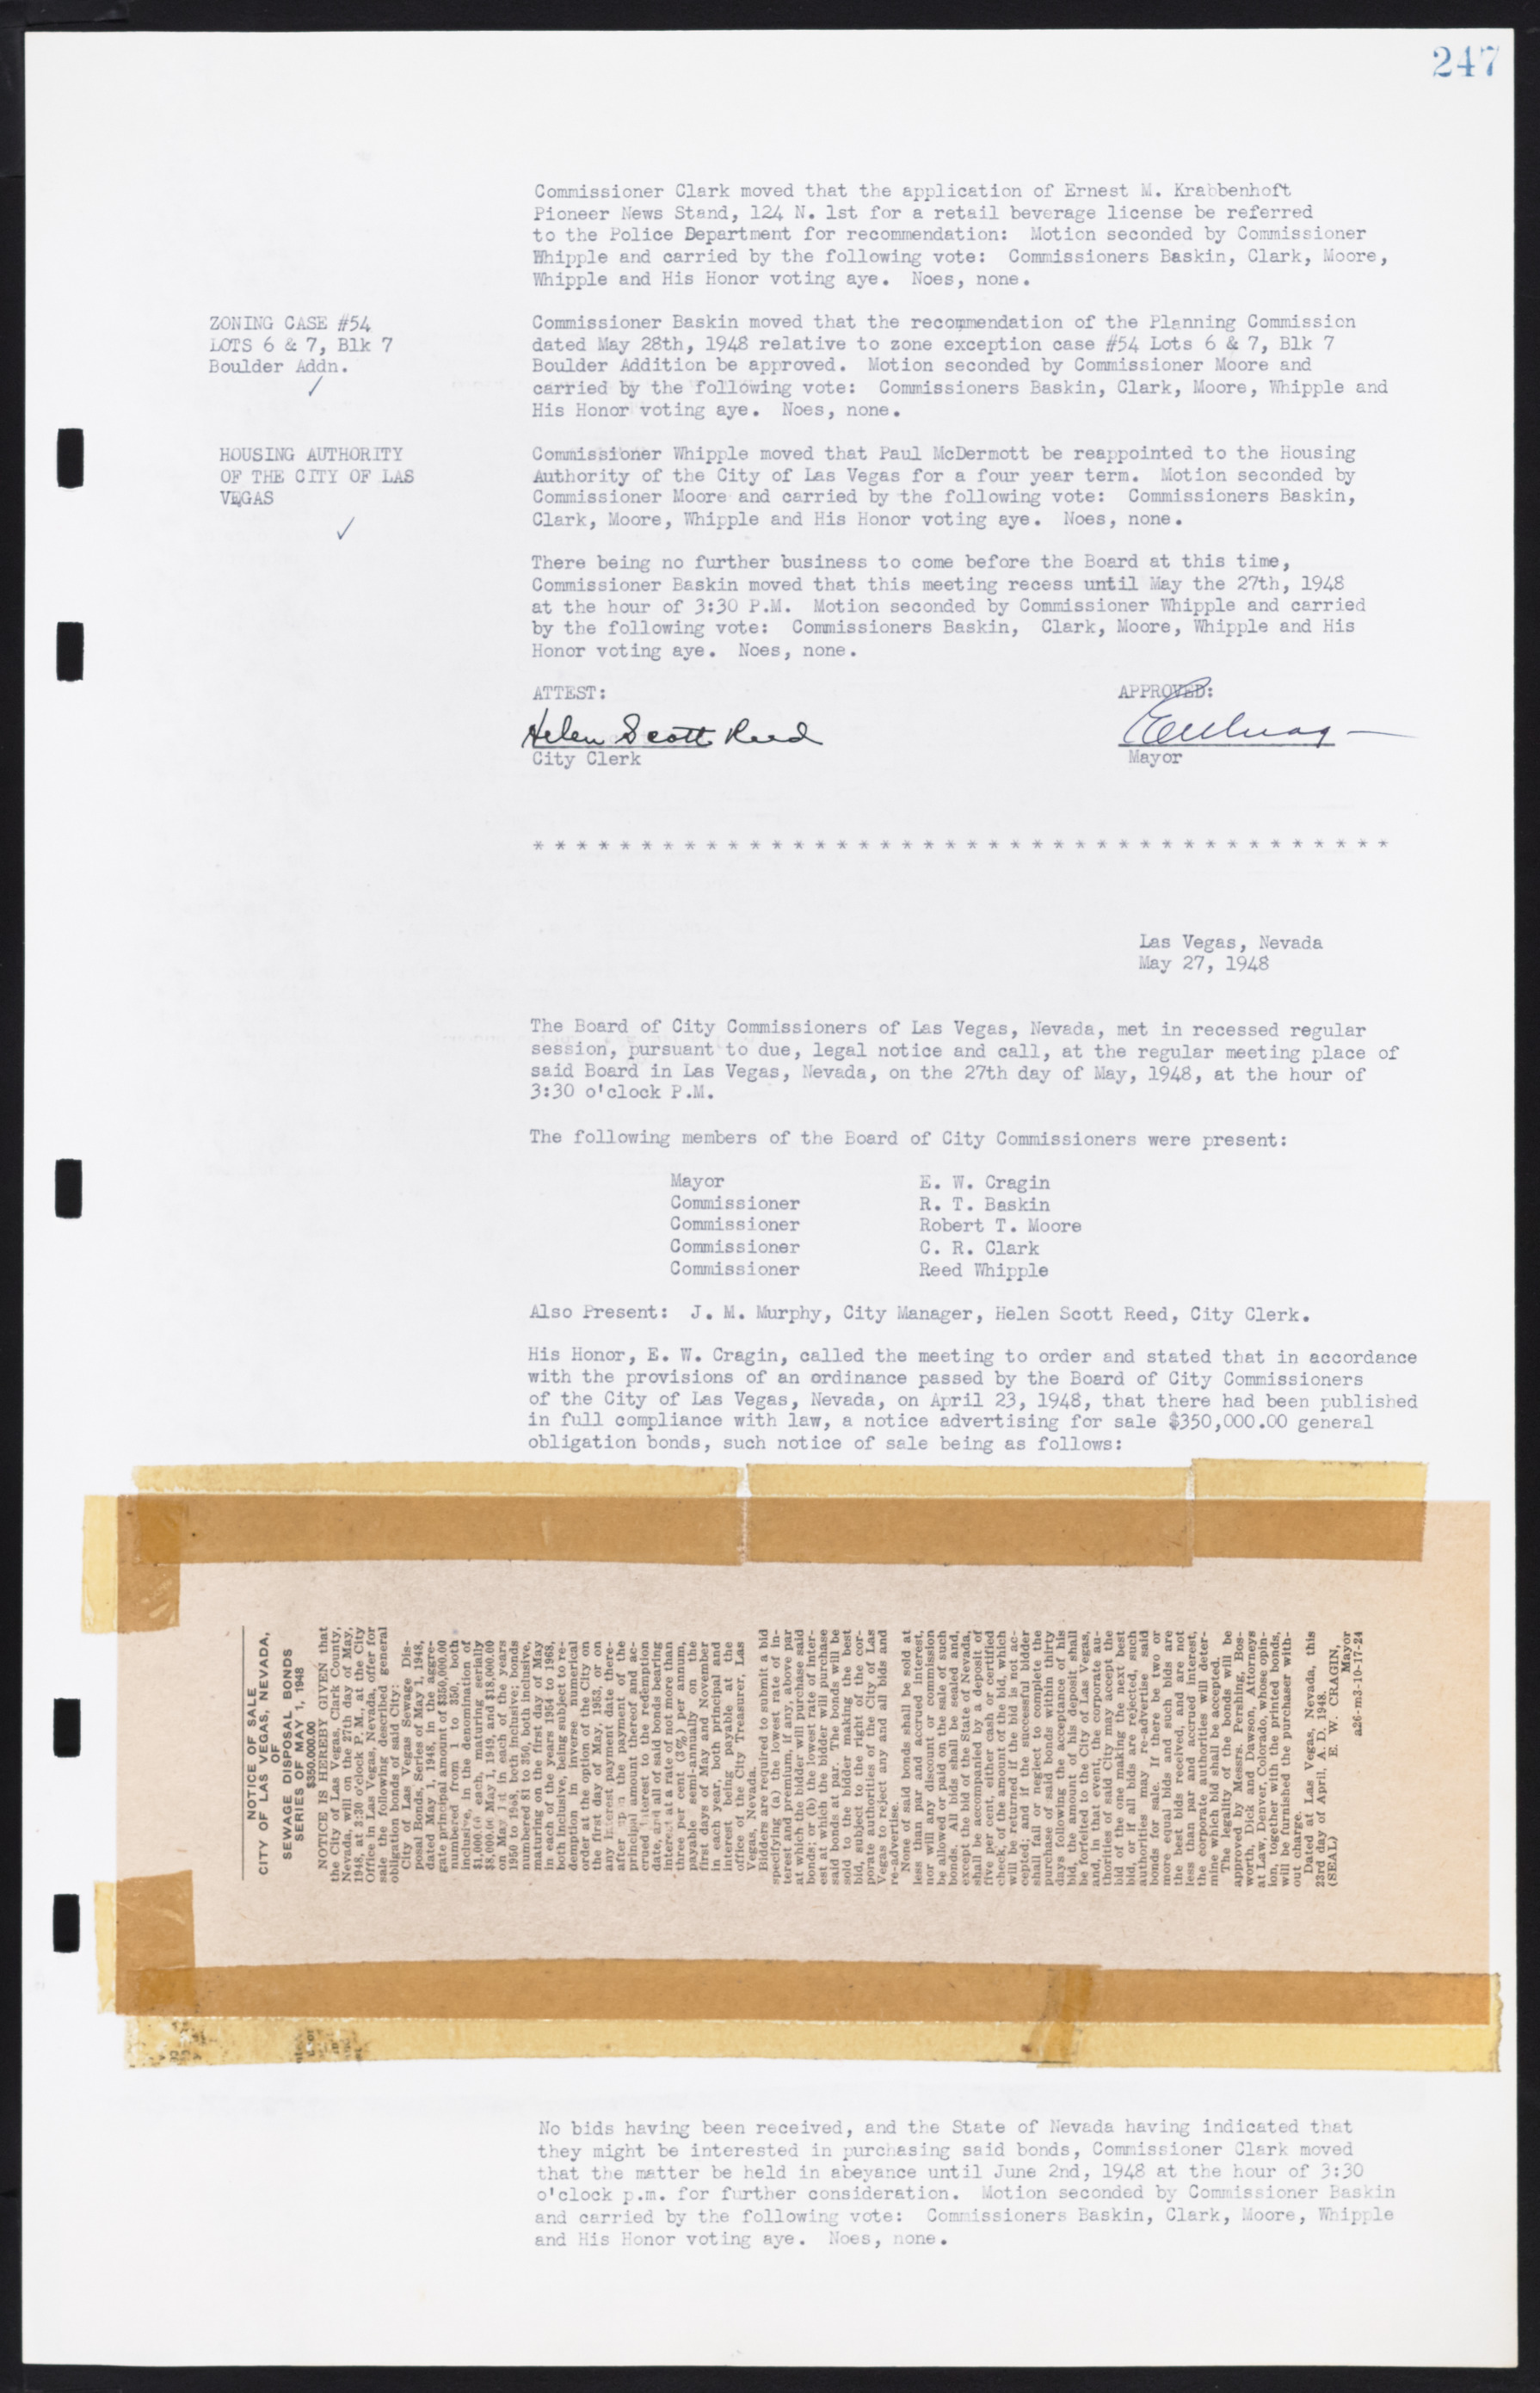 Las Vegas City Commission Minutes, January 7, 1947 to October 26, 1949, lvc000006-269